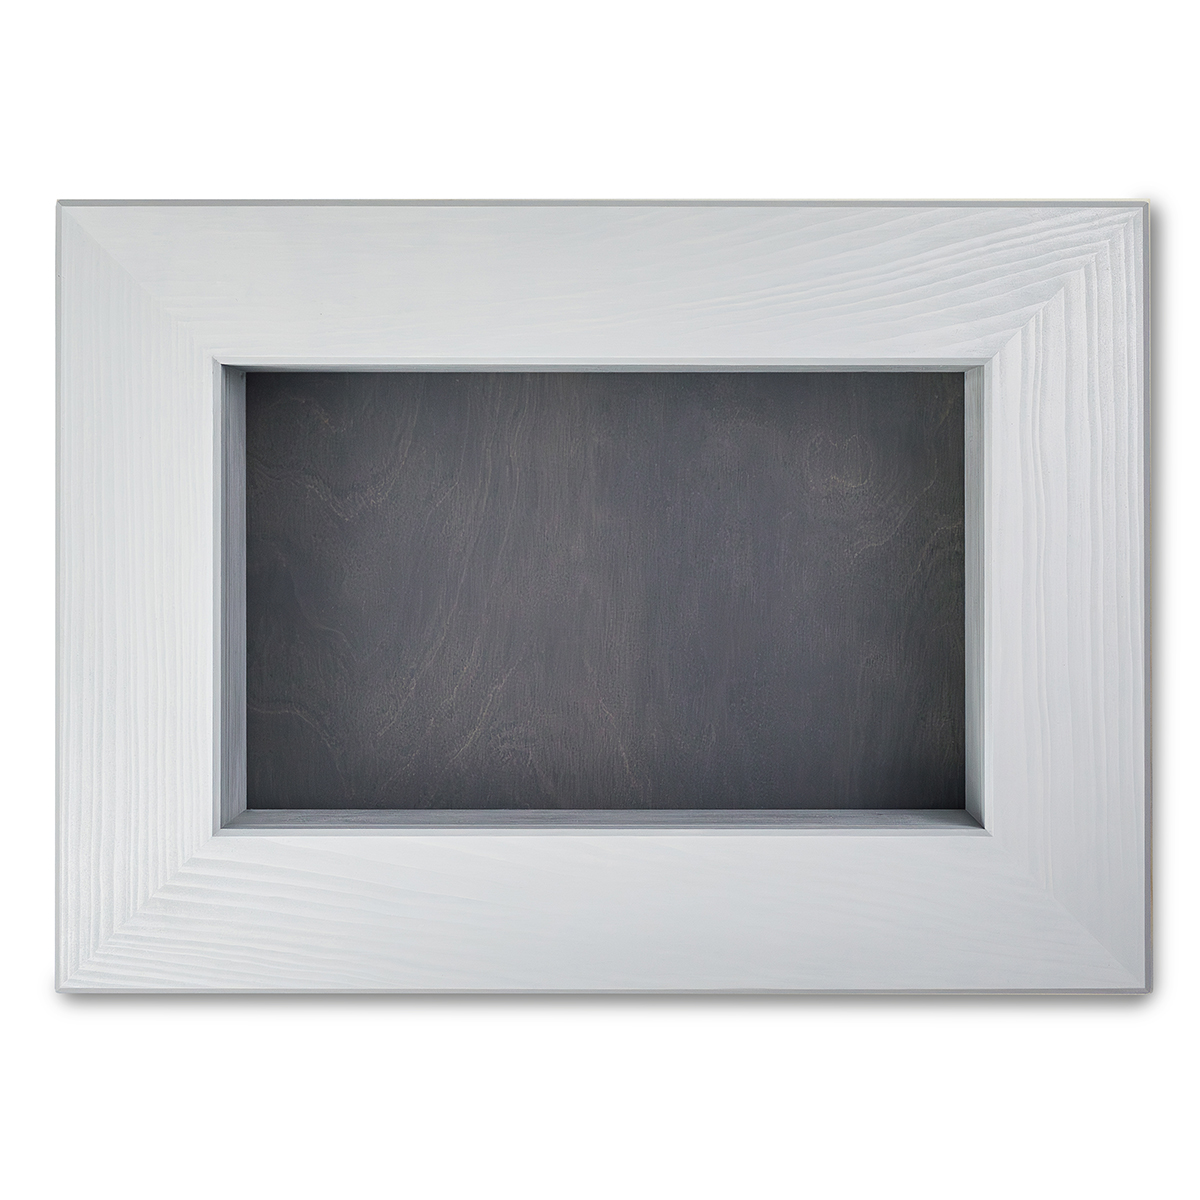 Wall frame, gray